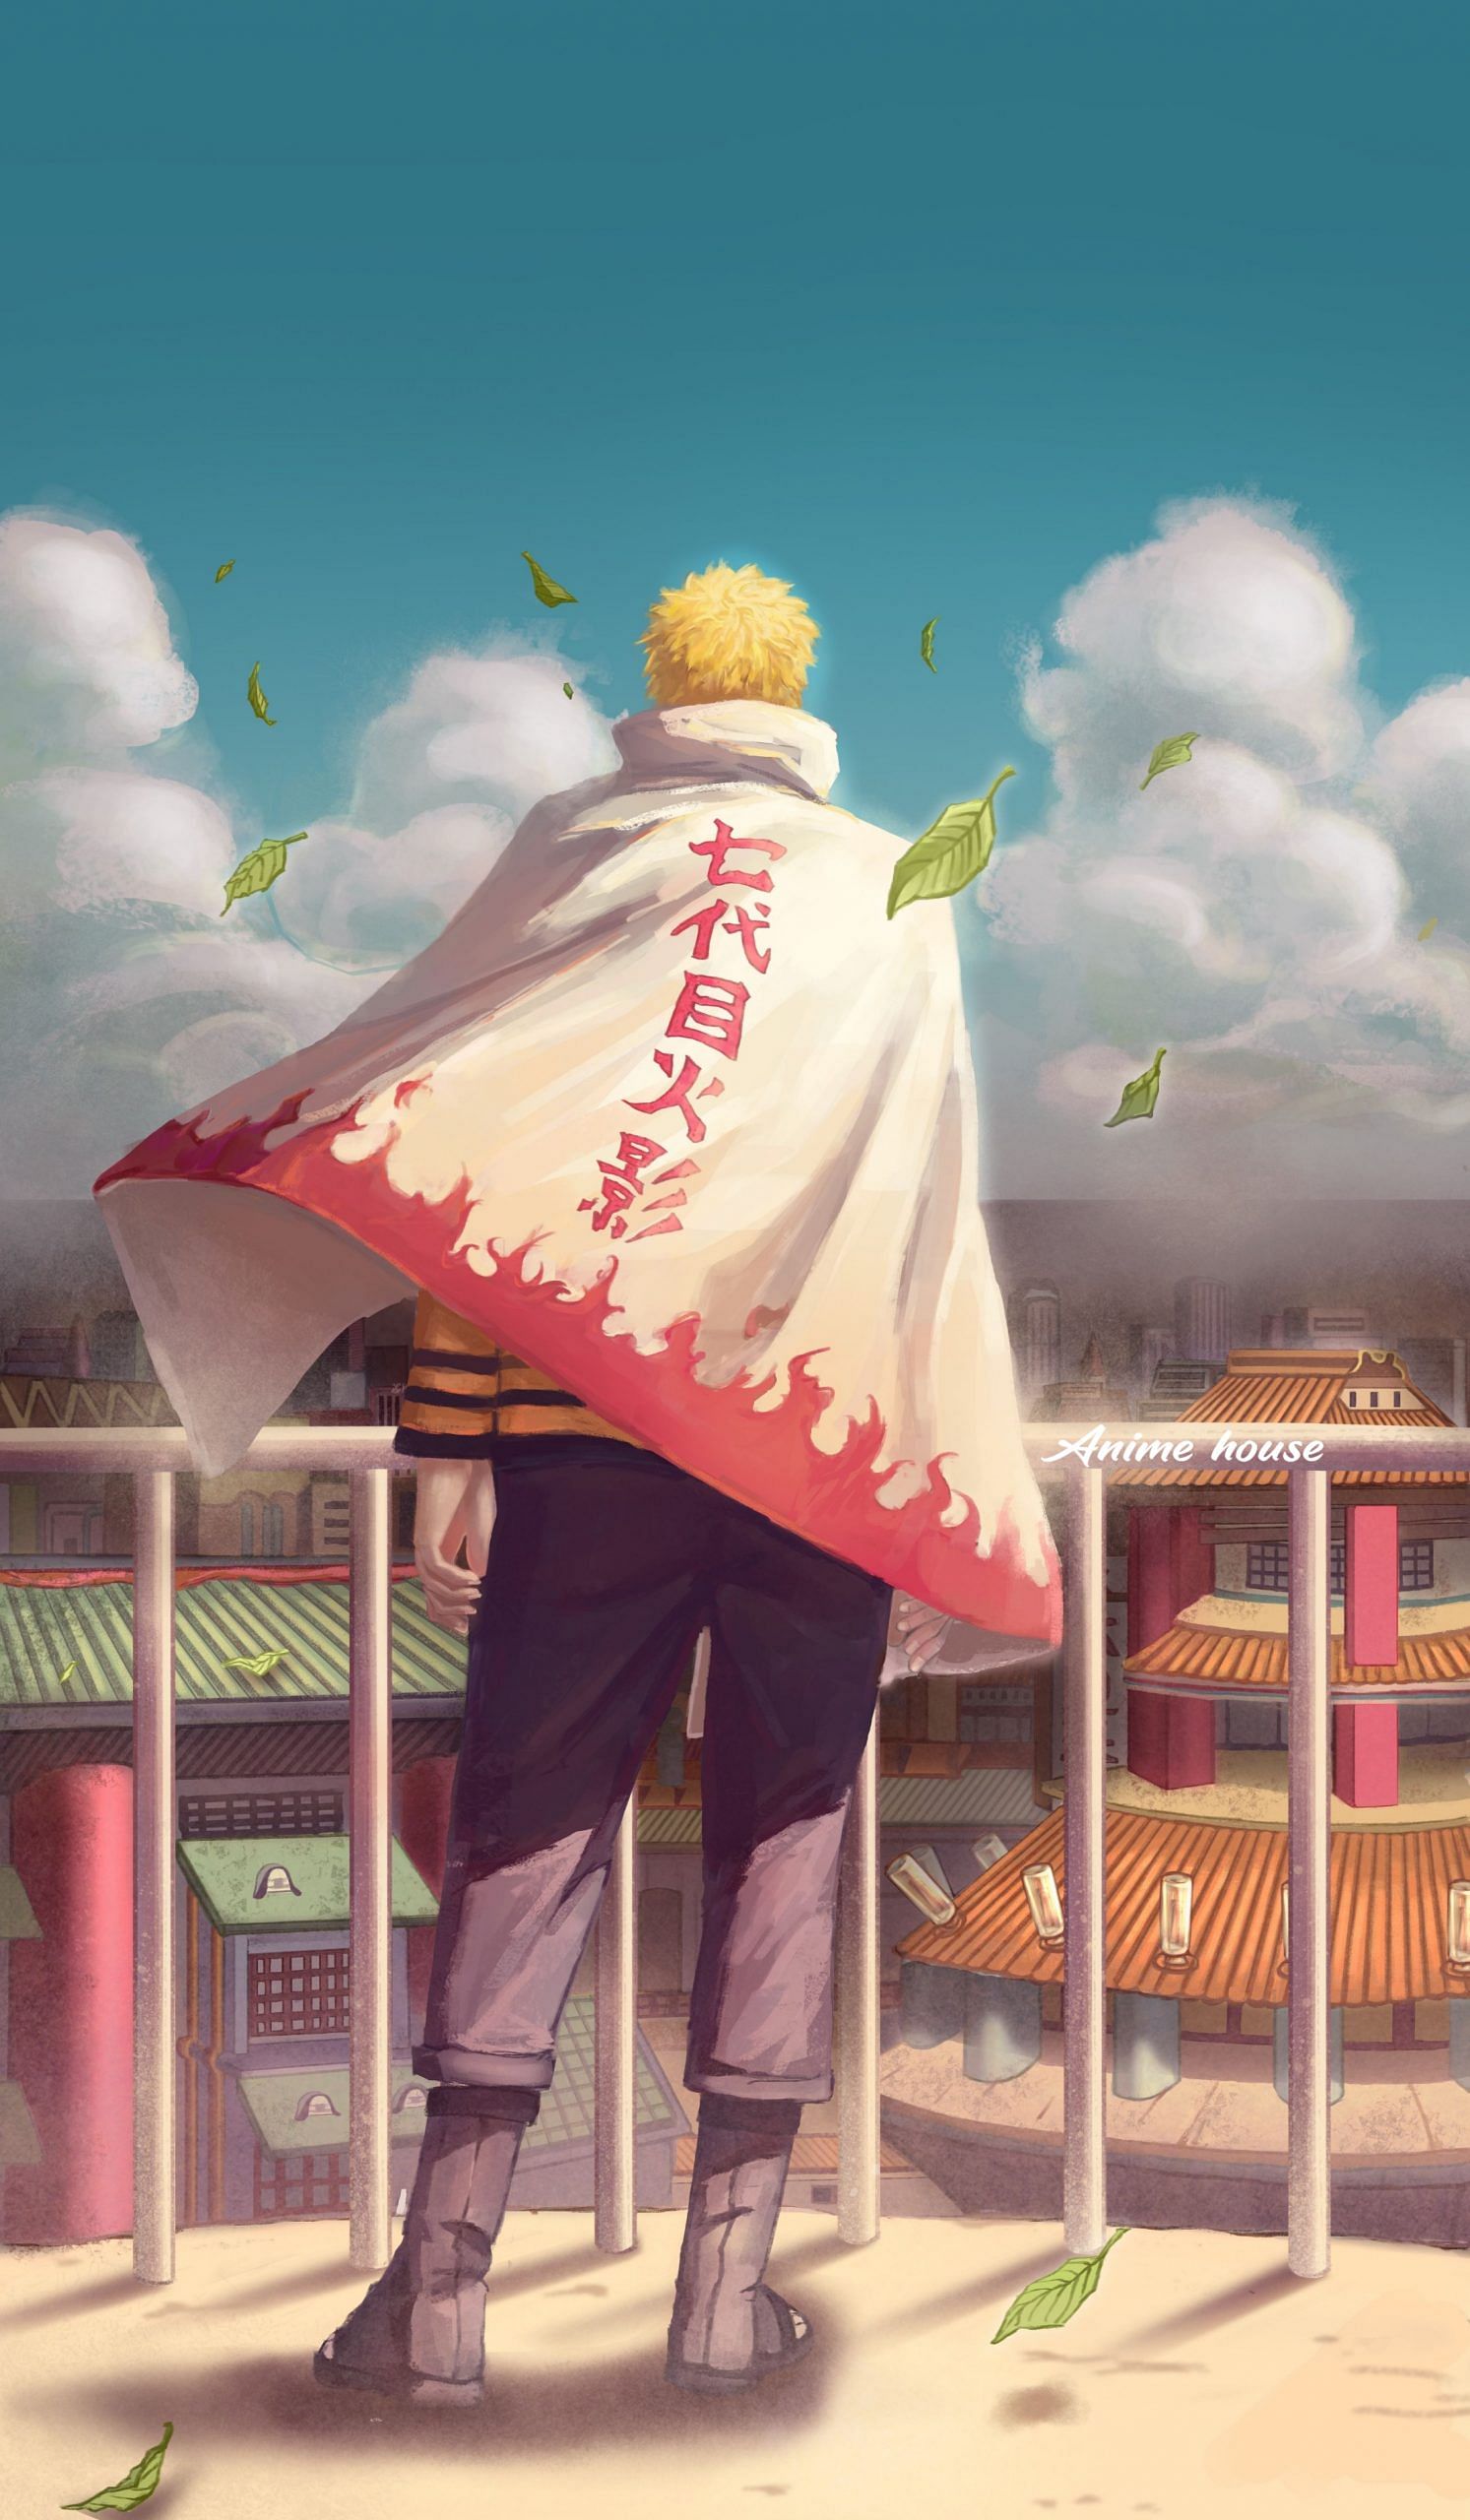 Naruto's transformation in Boruto: Naruto Next Generations - Sportskeeda  Stories